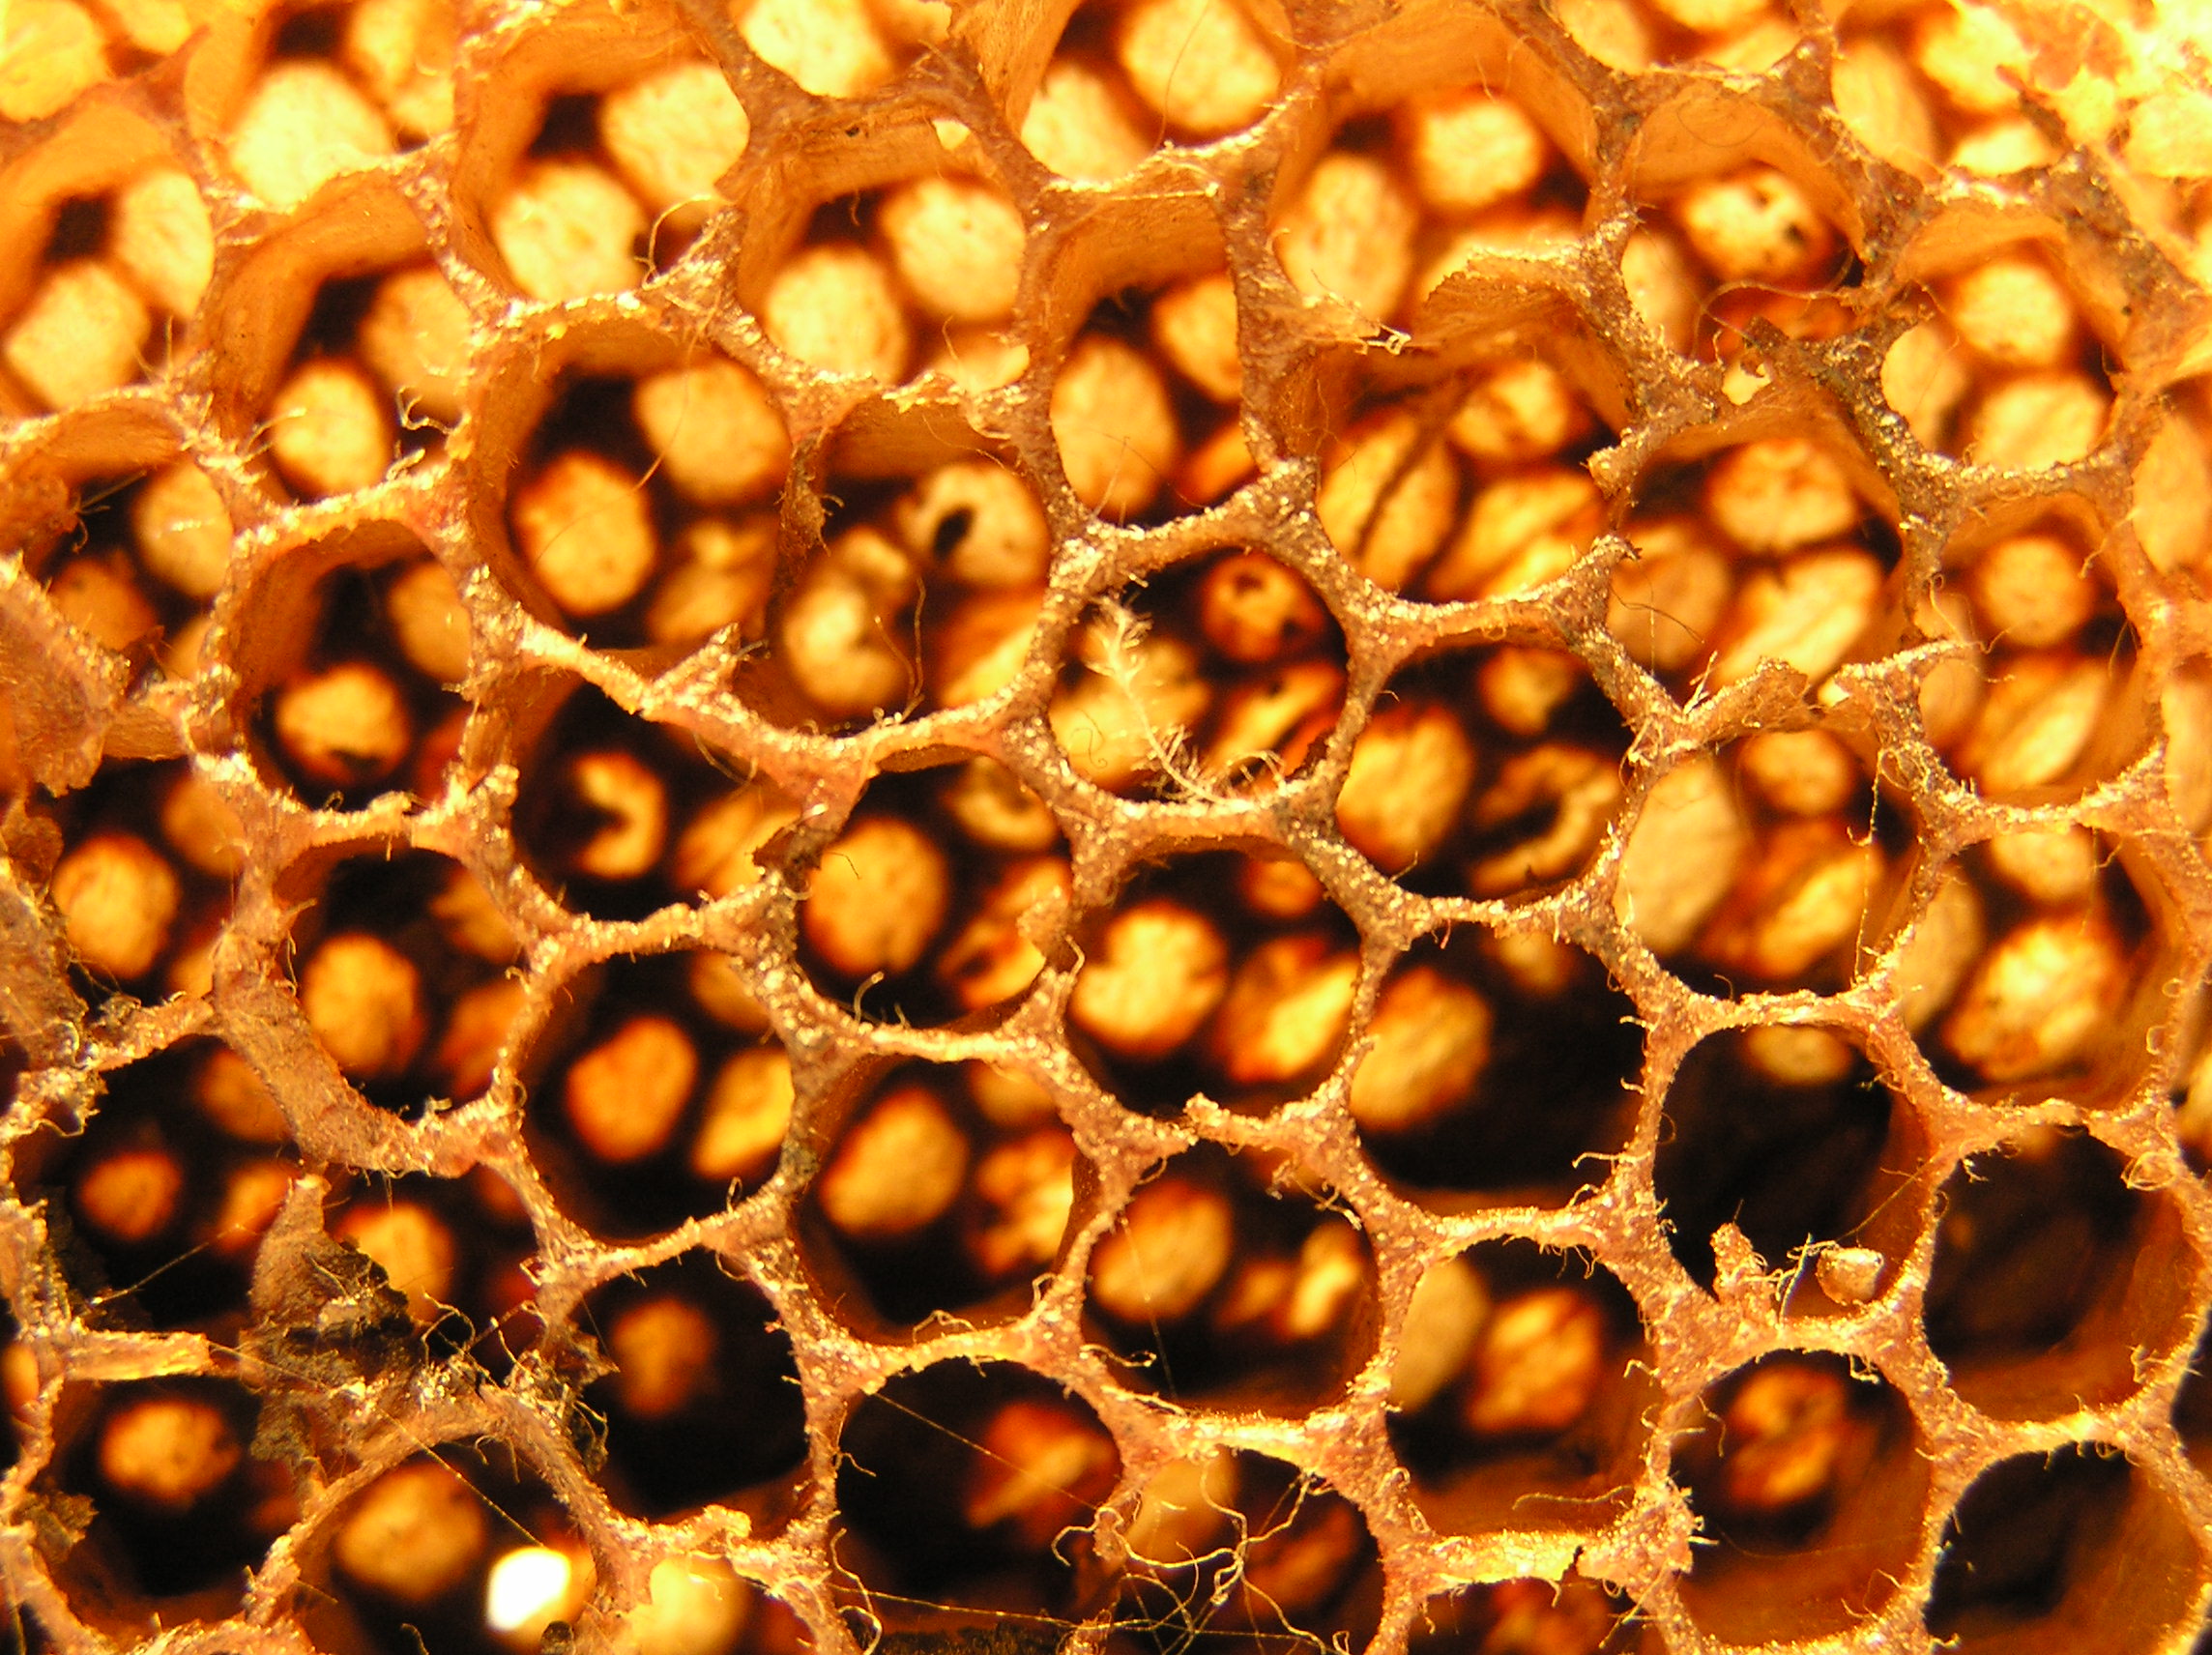 the honeycomb